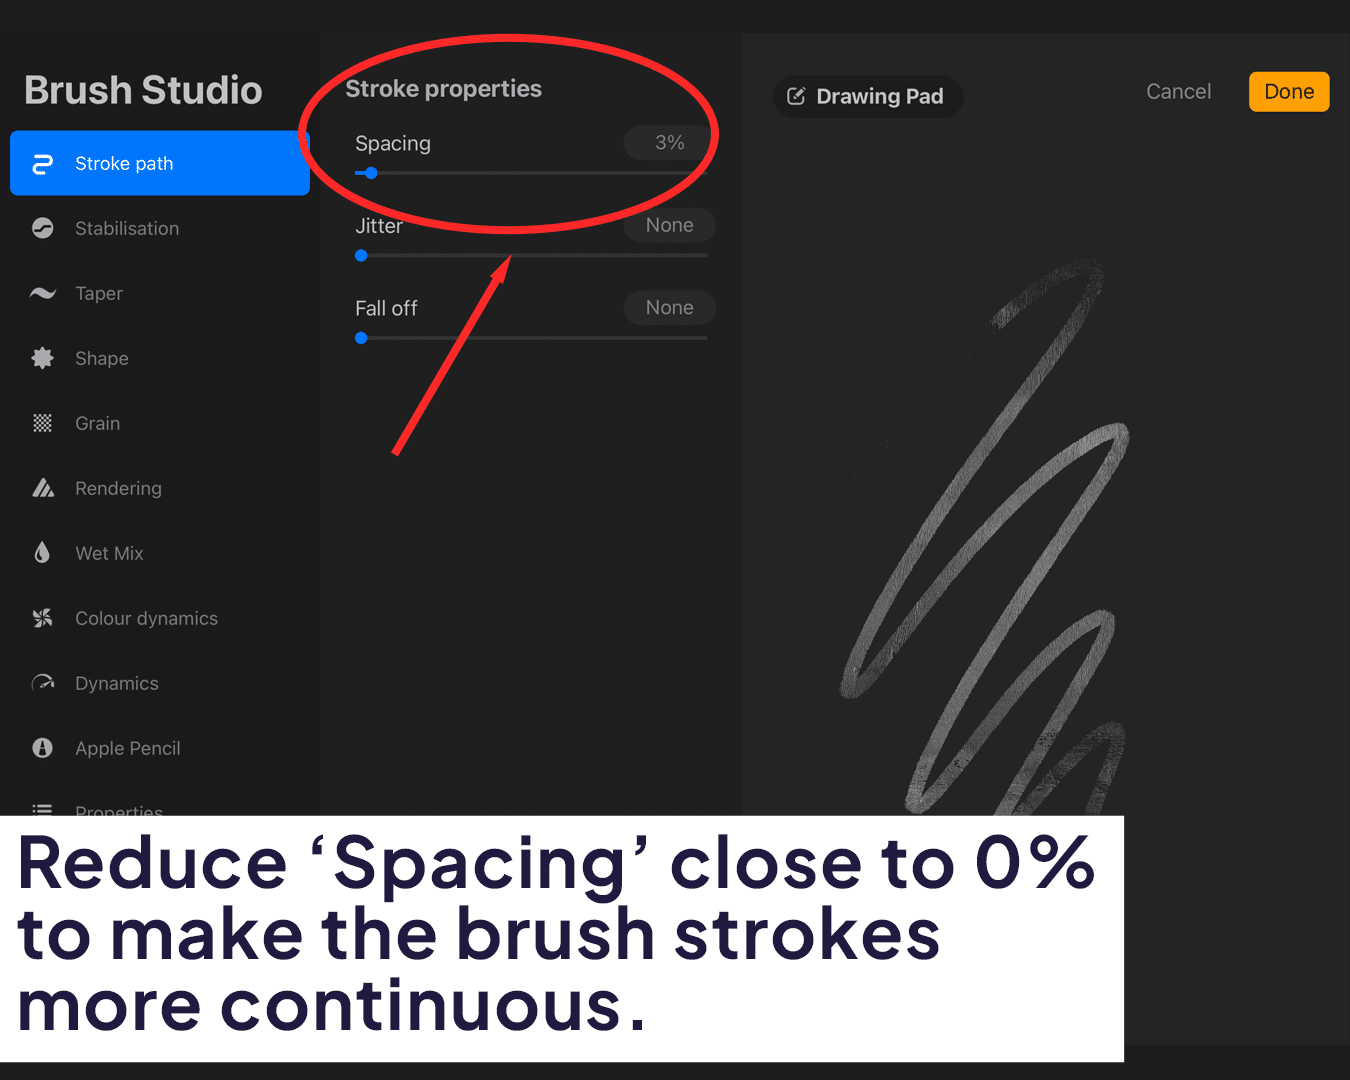 Reducing spacing close to 0%